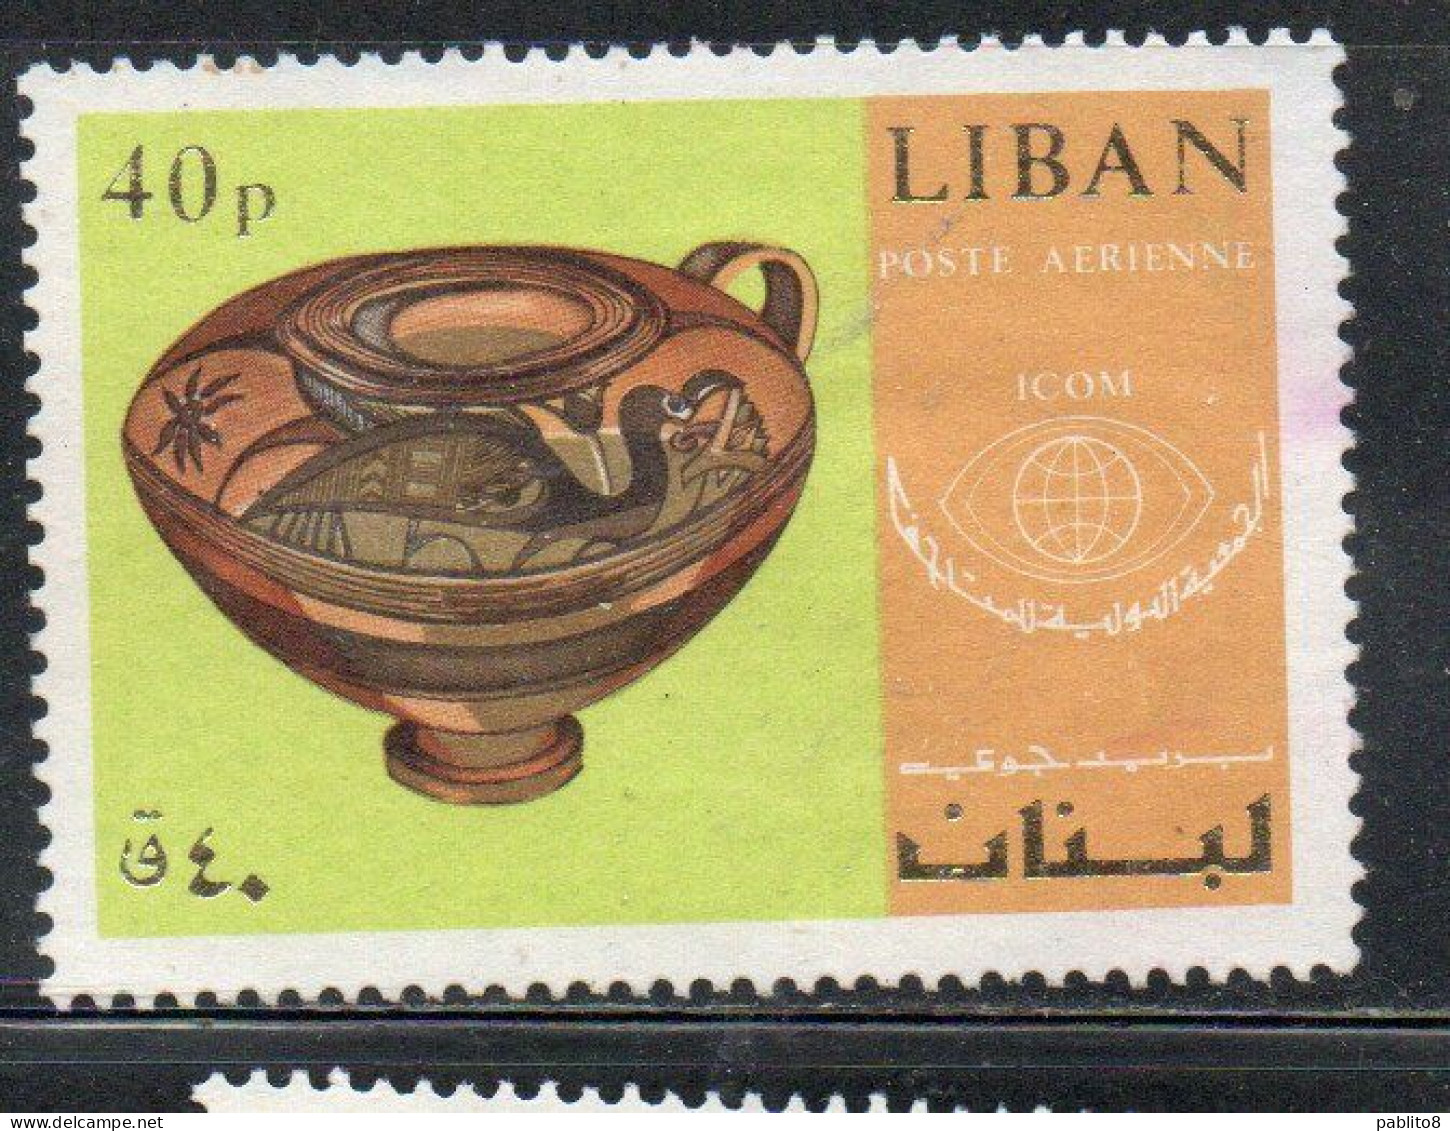 LIBANO LEBANON LIBAN 1969 AIR POST MAIL AIRMAIL ICOM INTERNATIONAL CONGRESS MUSEUM COUNCILS PHOENICIAN BIRD VASE40p USED - Lebanon